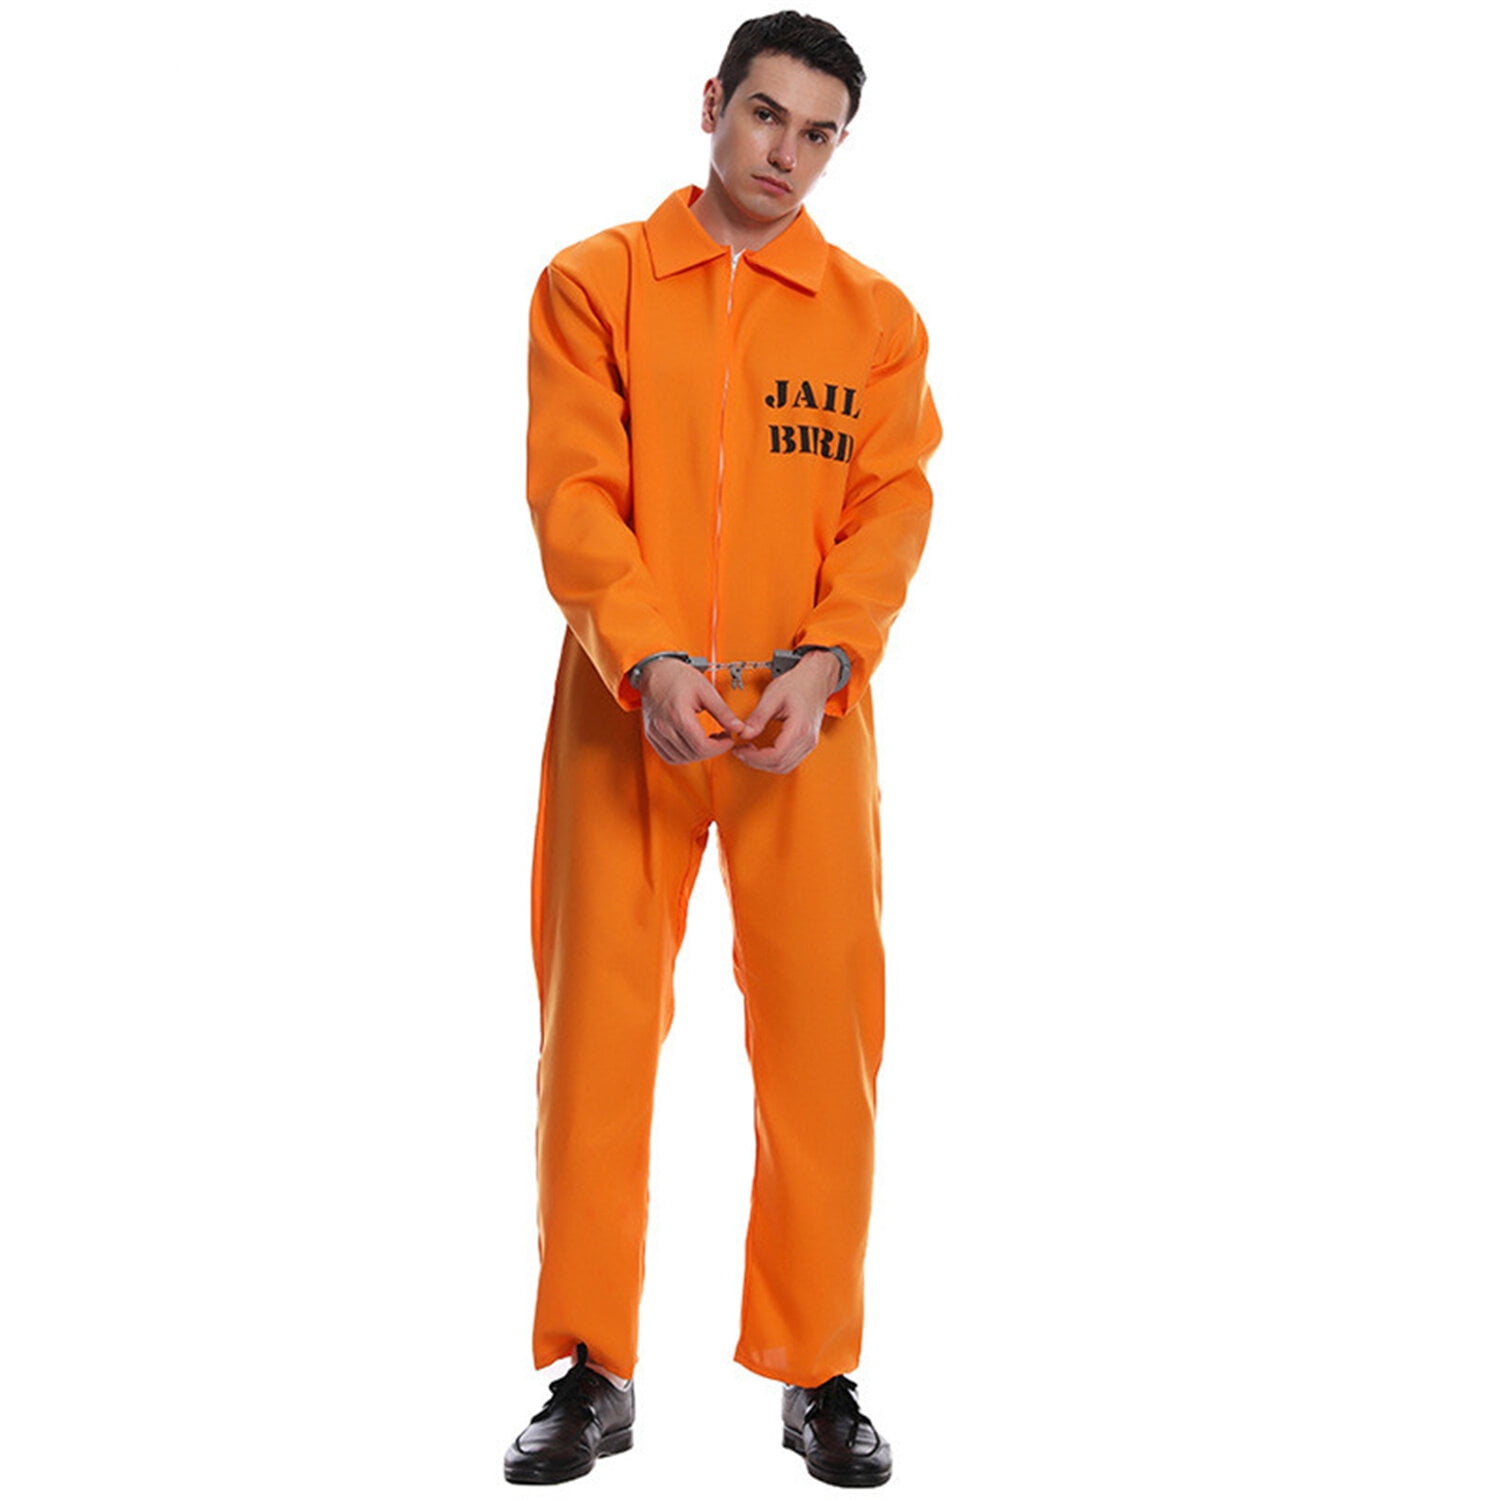 Adult Prisoner Costume Orange Prison Jumpsuit Adult Jail Bird Halloween Costumes For Men With